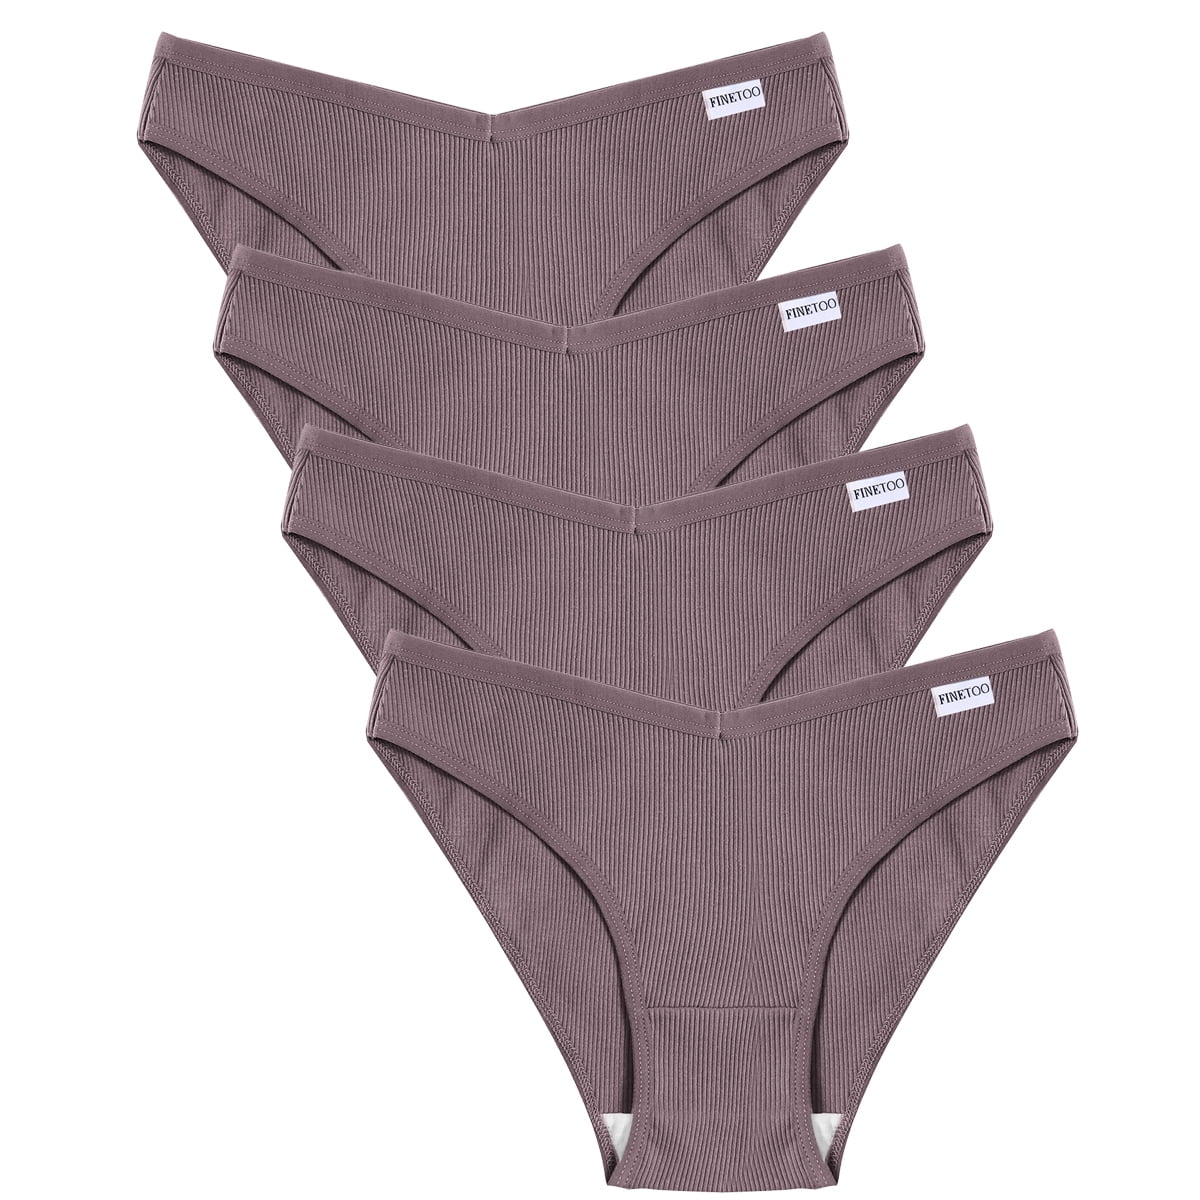 Finetoo Cotton Underwear For Women High Cut Cheeky Panties Soft